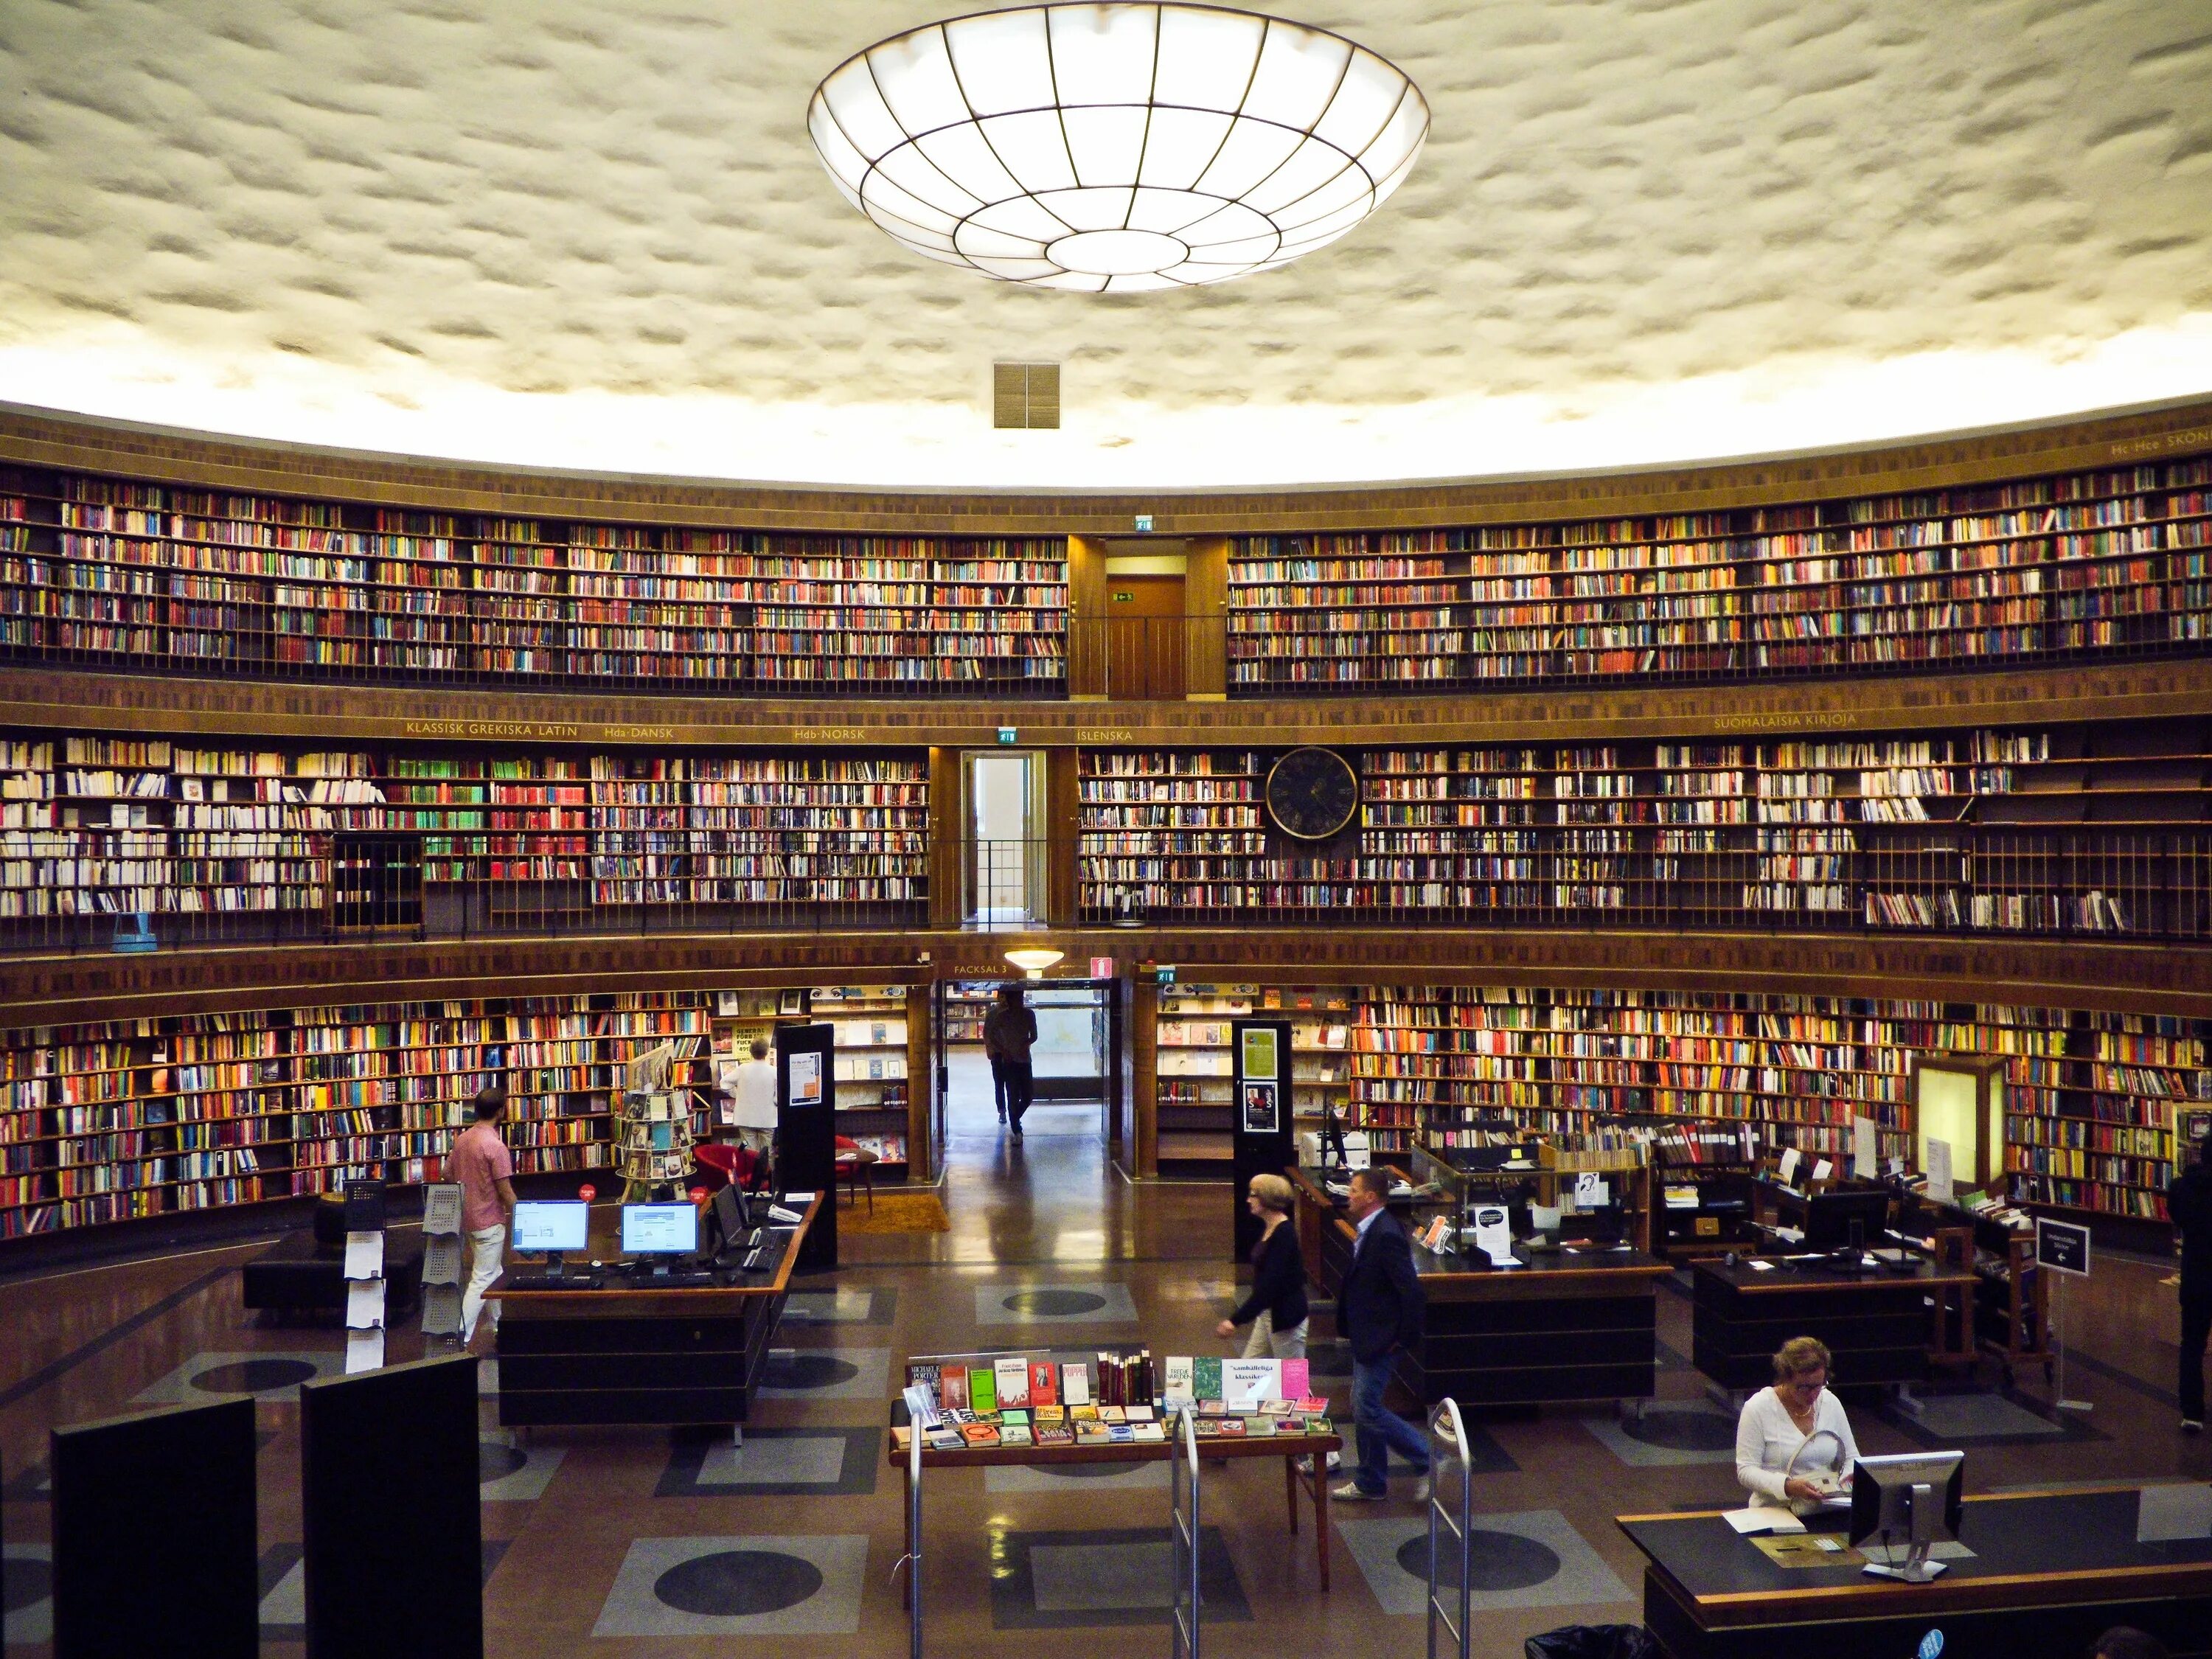 G library. Библиотека Гарвардского университета. Библиотеке Гарвардского университета (США. Библиотека Джона Райландса Манчестер. Гарвардский университет внутри.